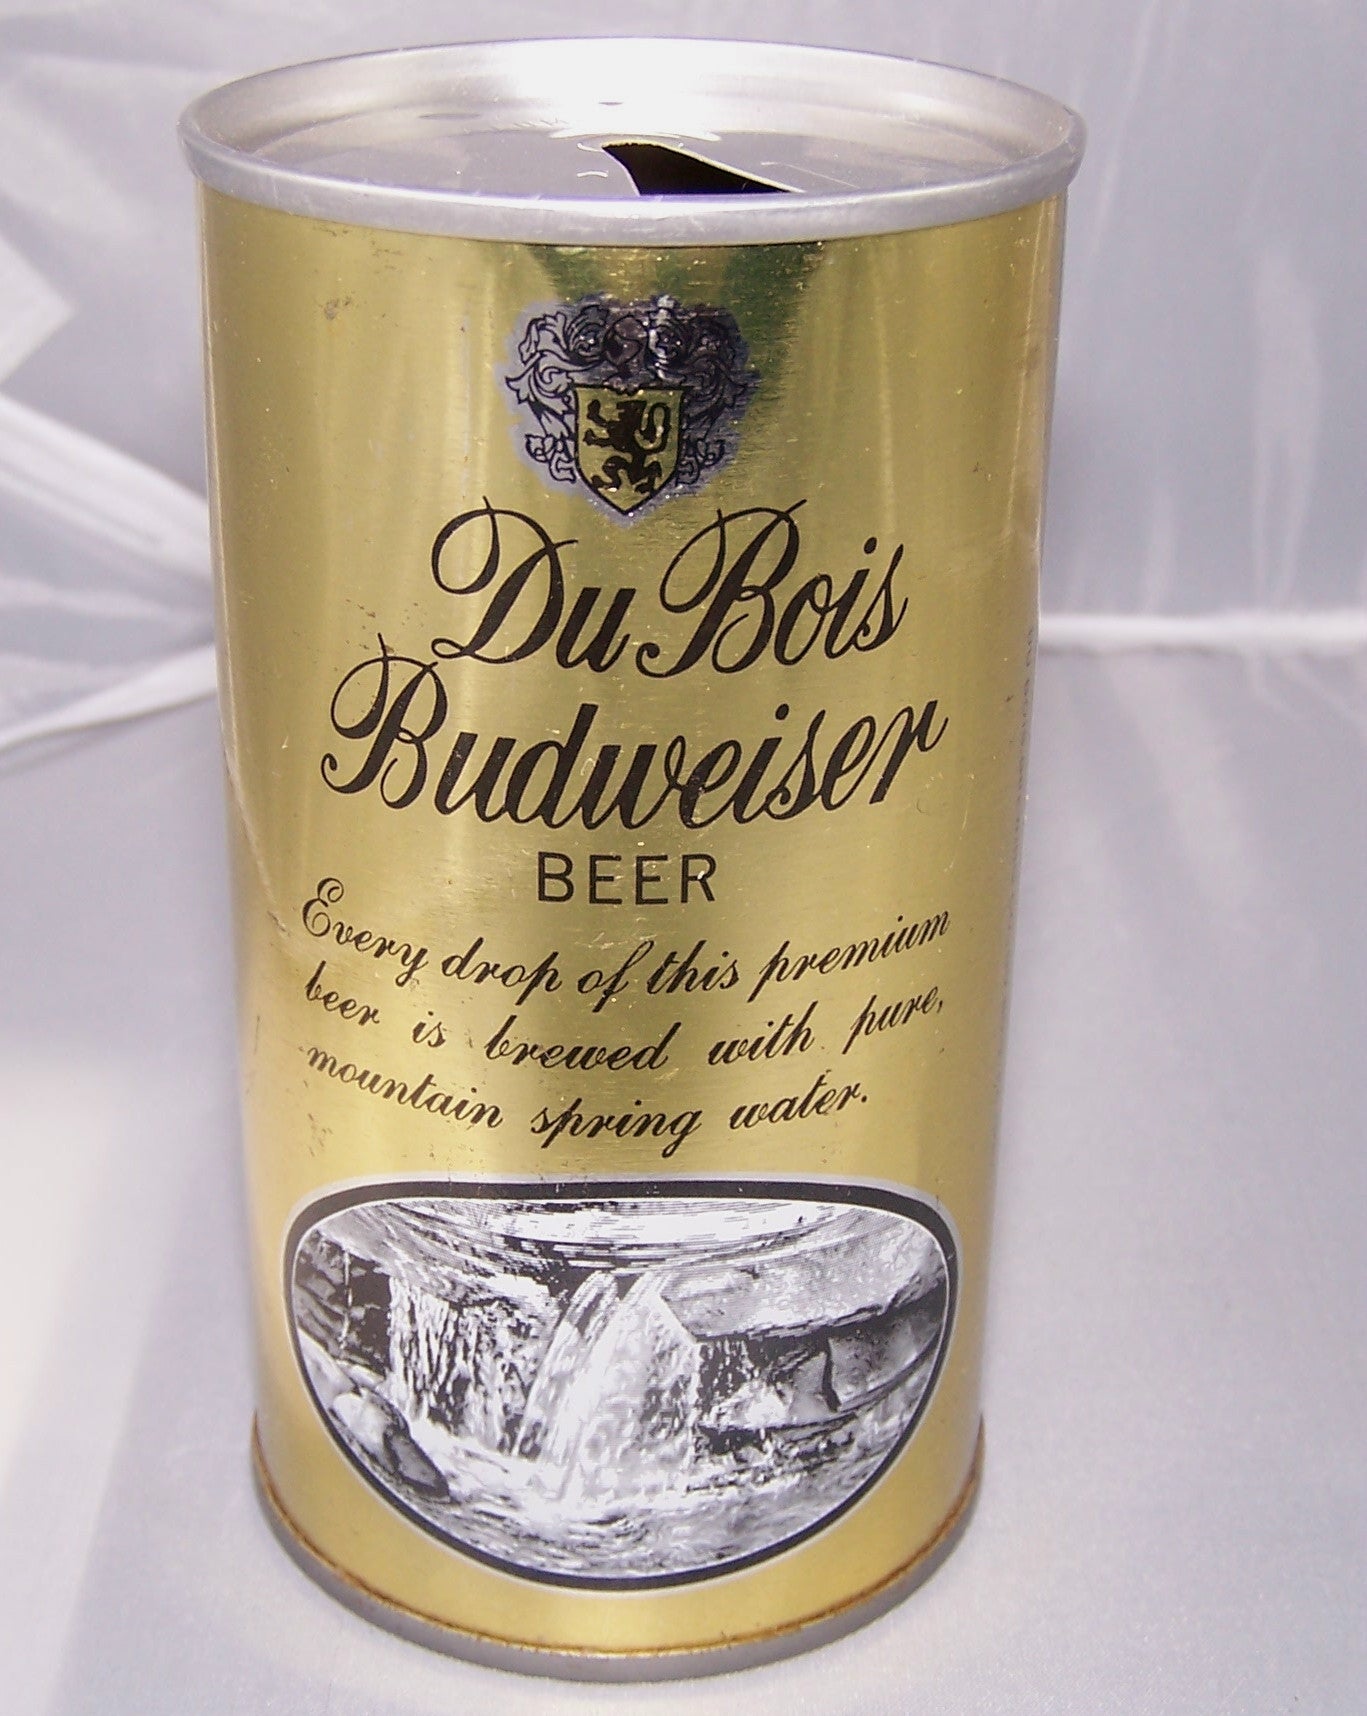 Dubois Budweiser Beer, USBC II 59-38, Grade 1 to 1/1+ Sold on 12/01/16